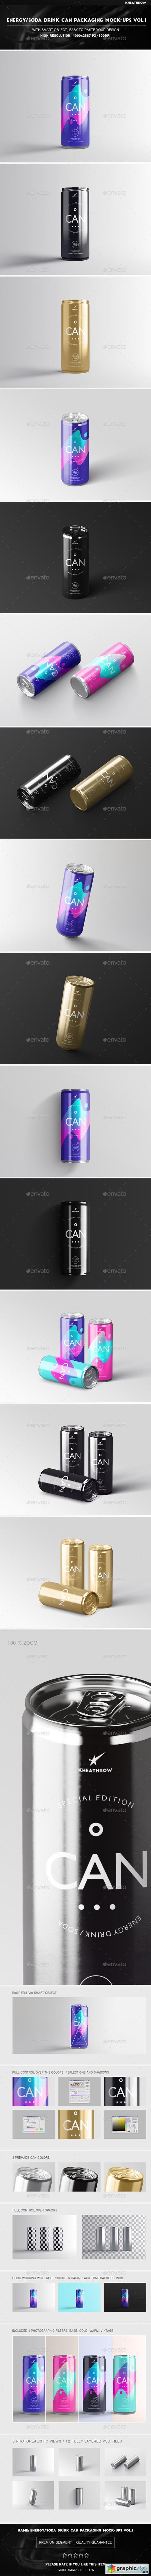 Energy / Soda Drink Can Packaging Mock-Ups